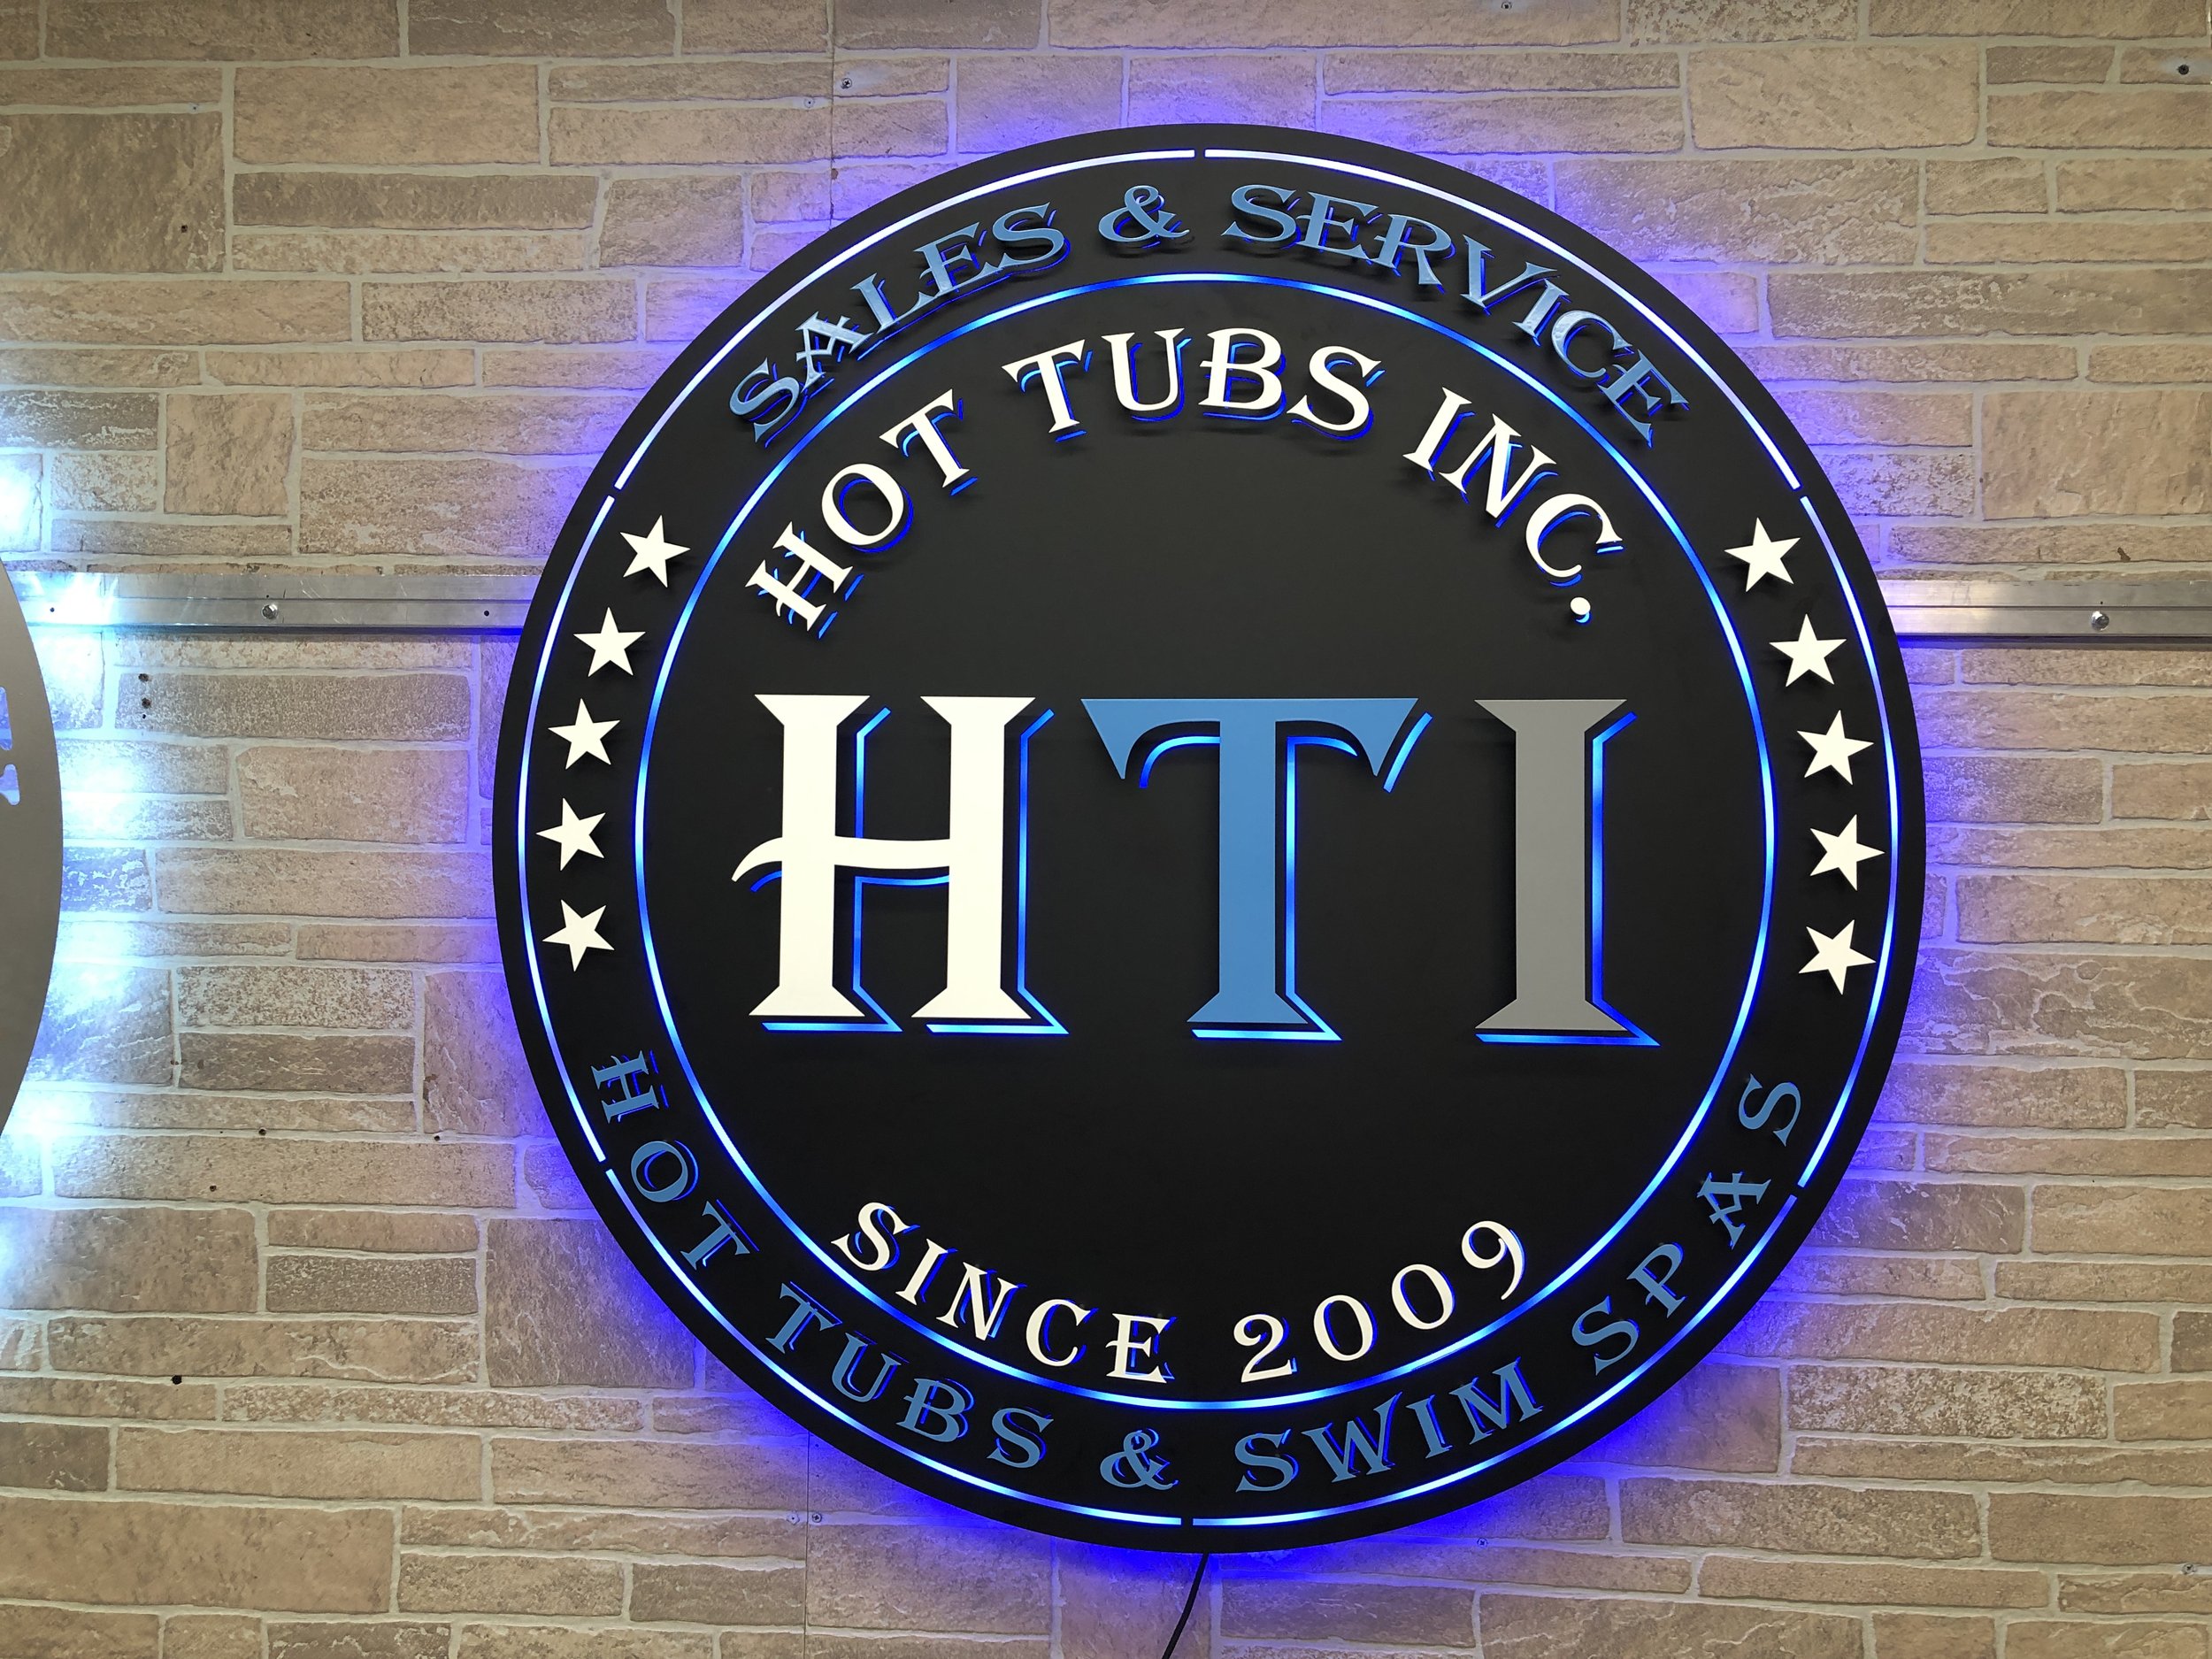 Hot Tubs Inc multi layer back lighting (2).JPG